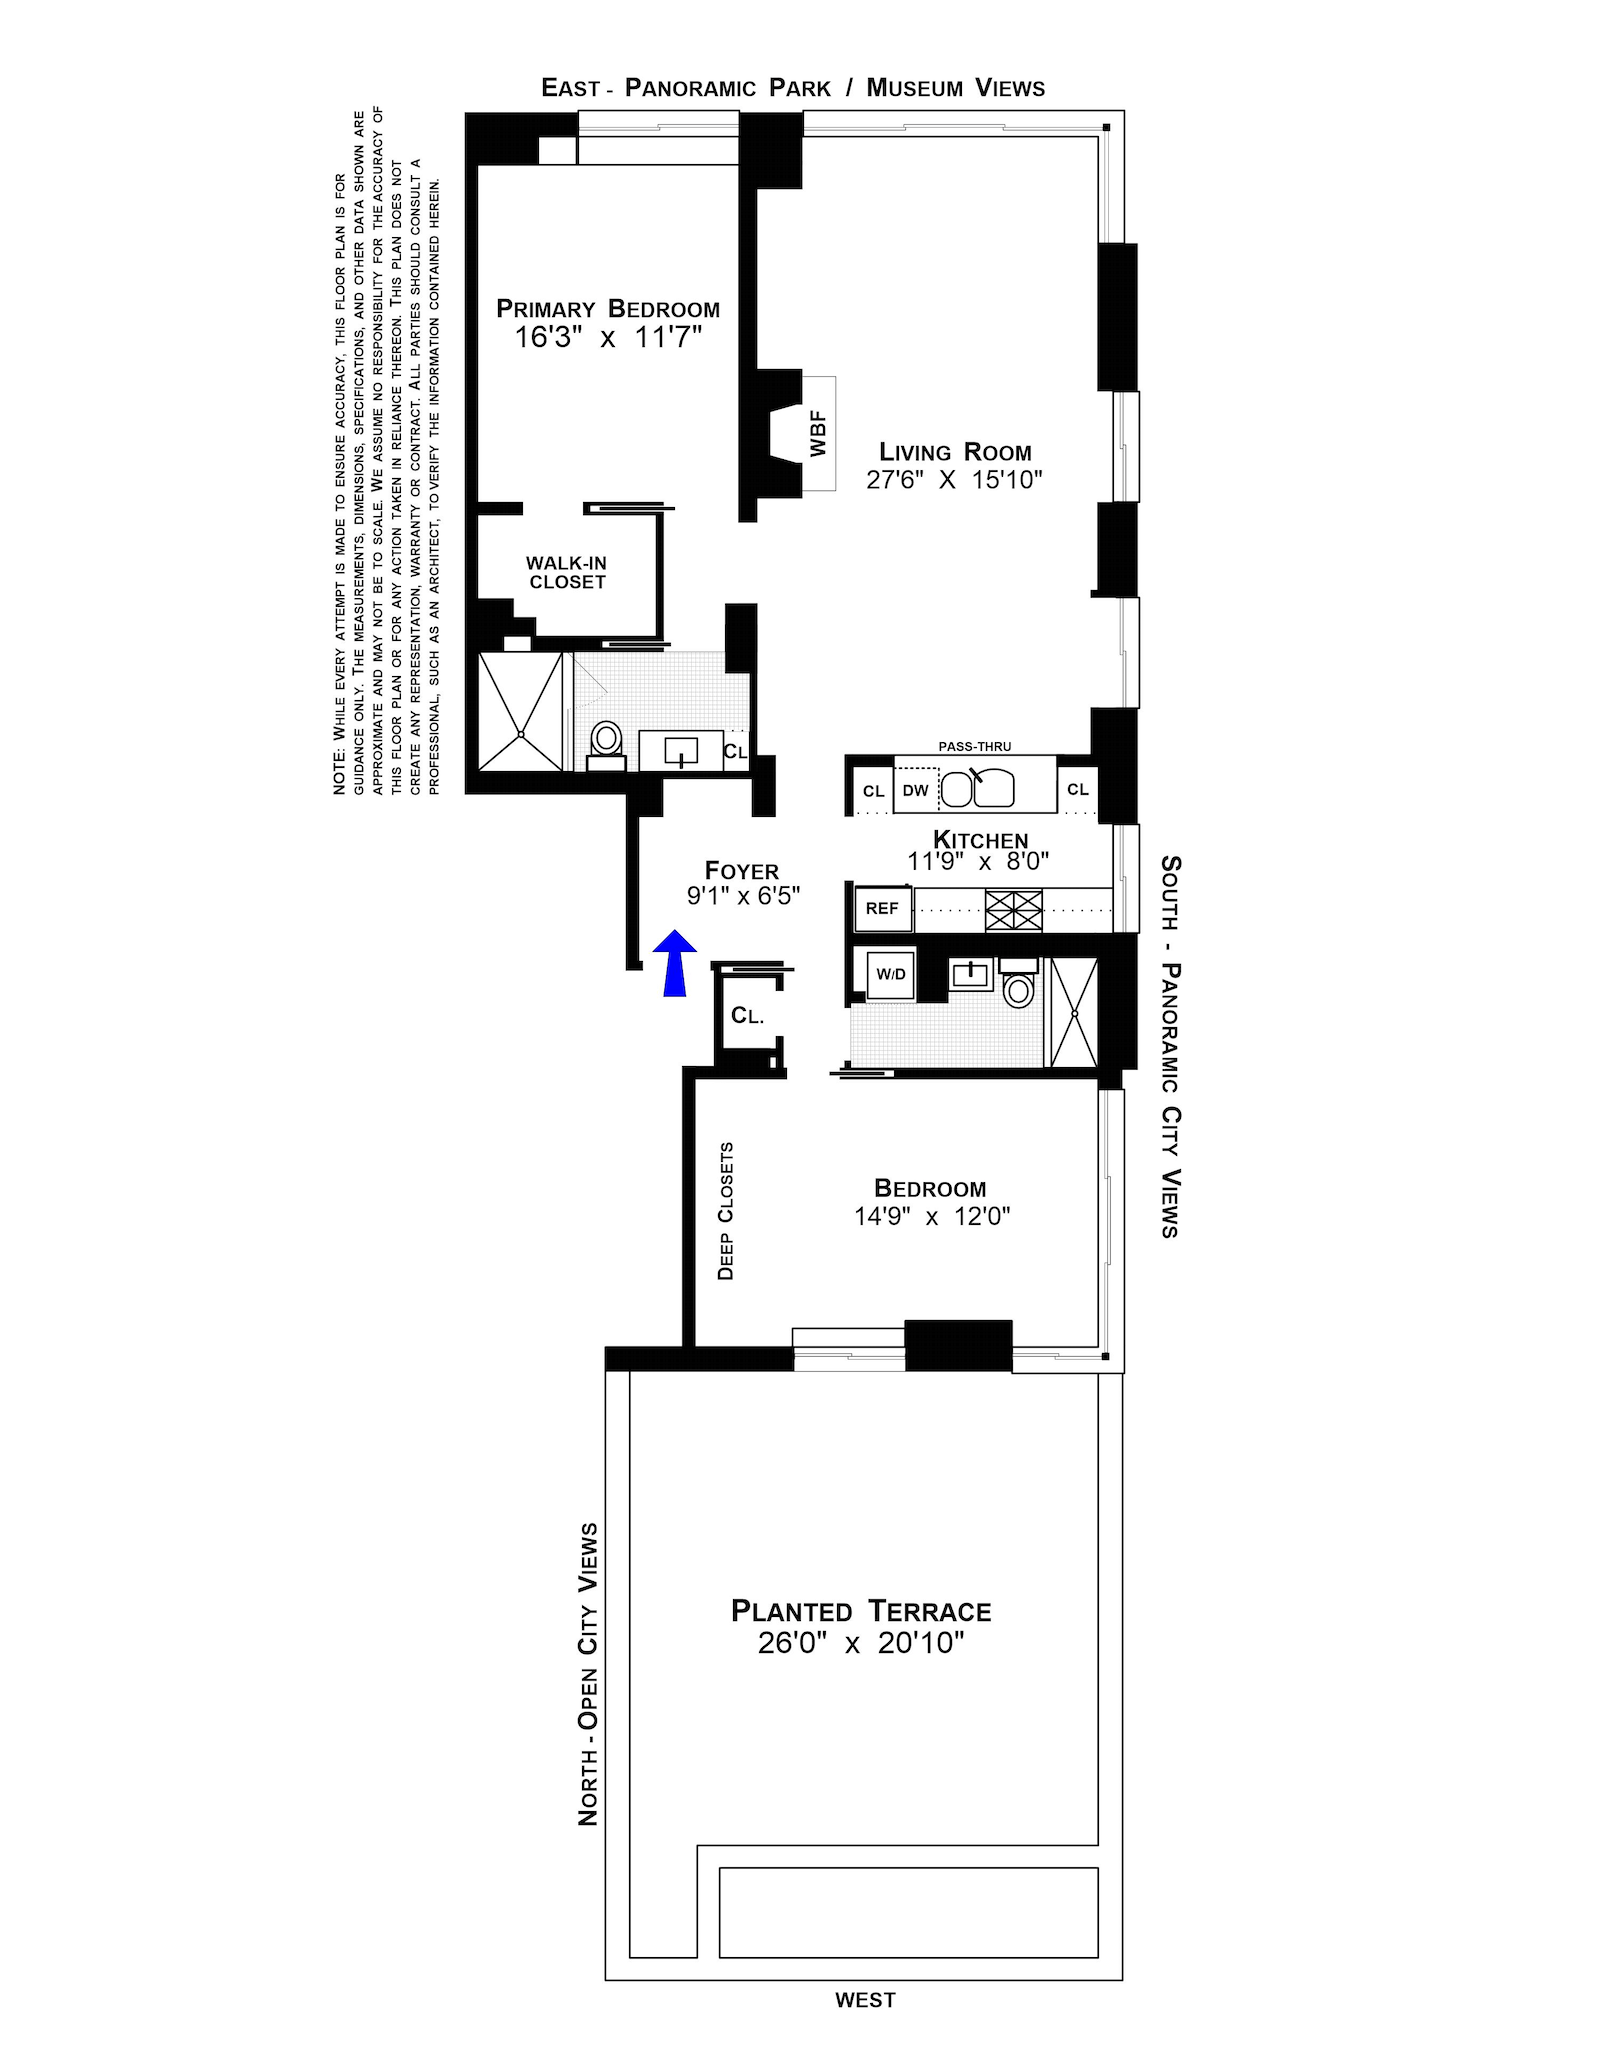 Floorplan for 101 West 79th Street